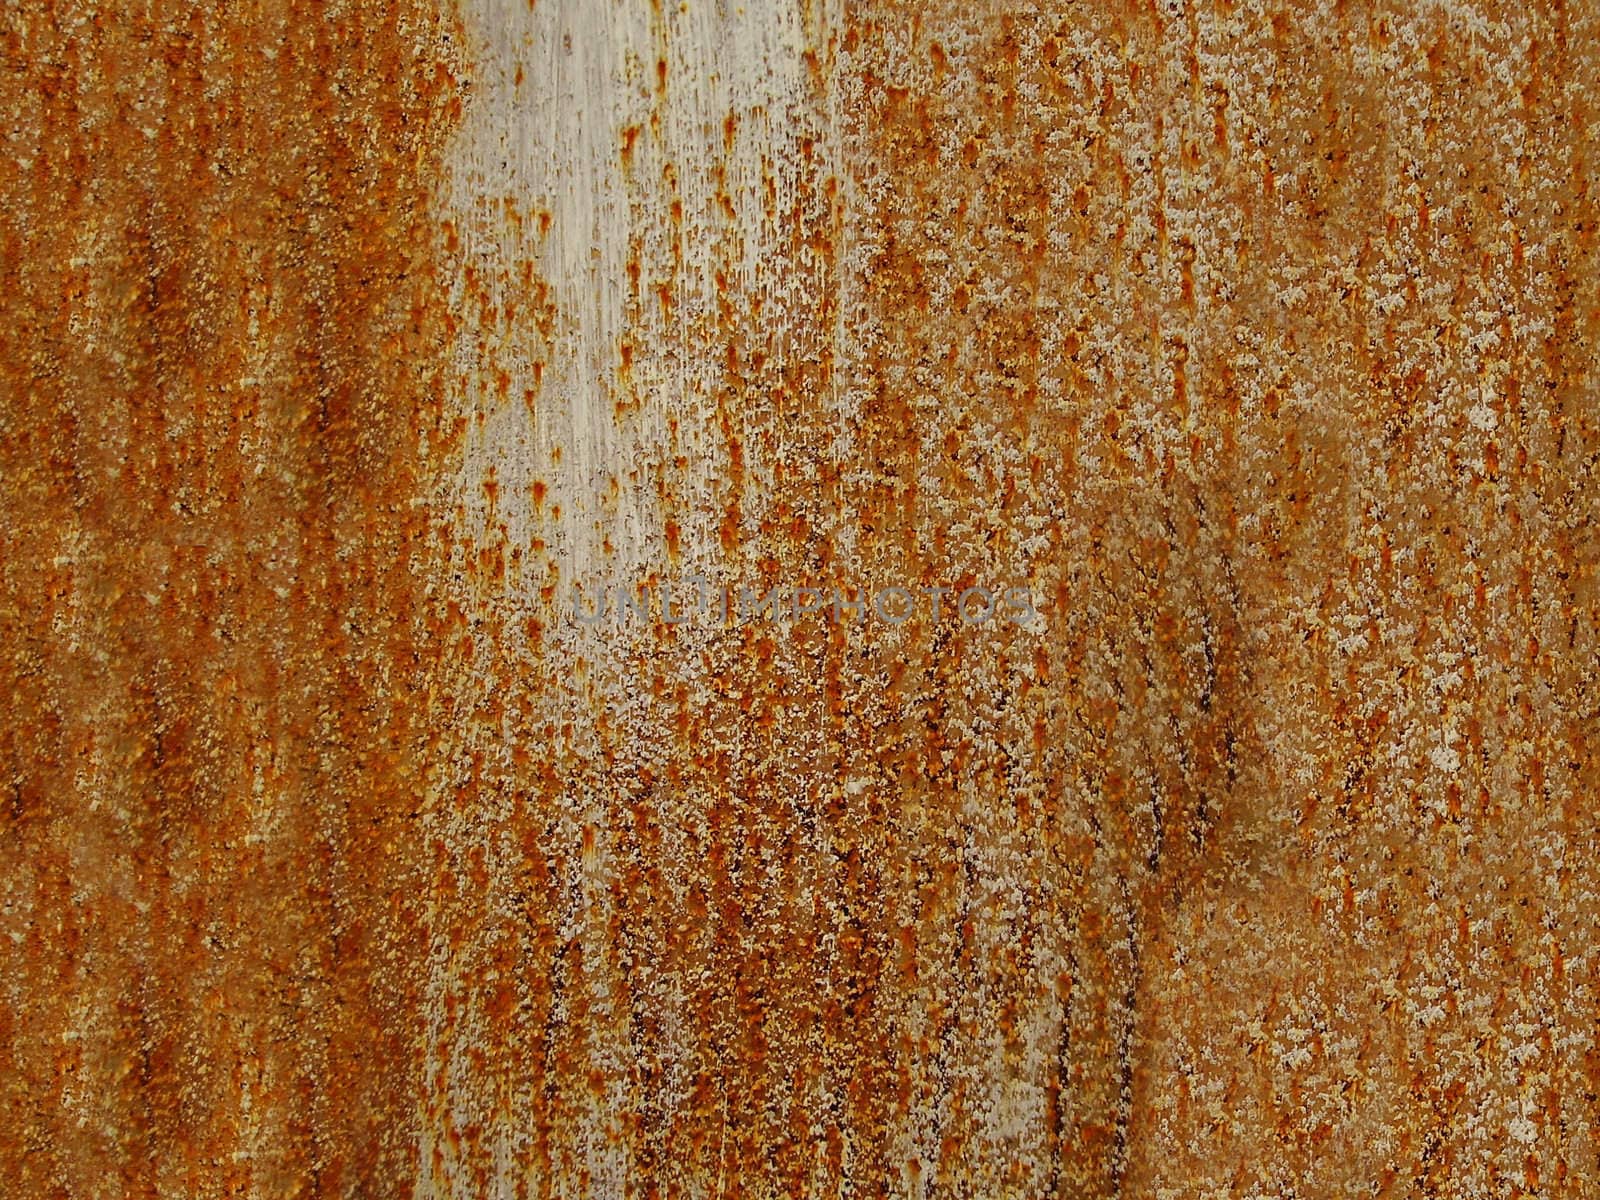  corrosion ferric background   